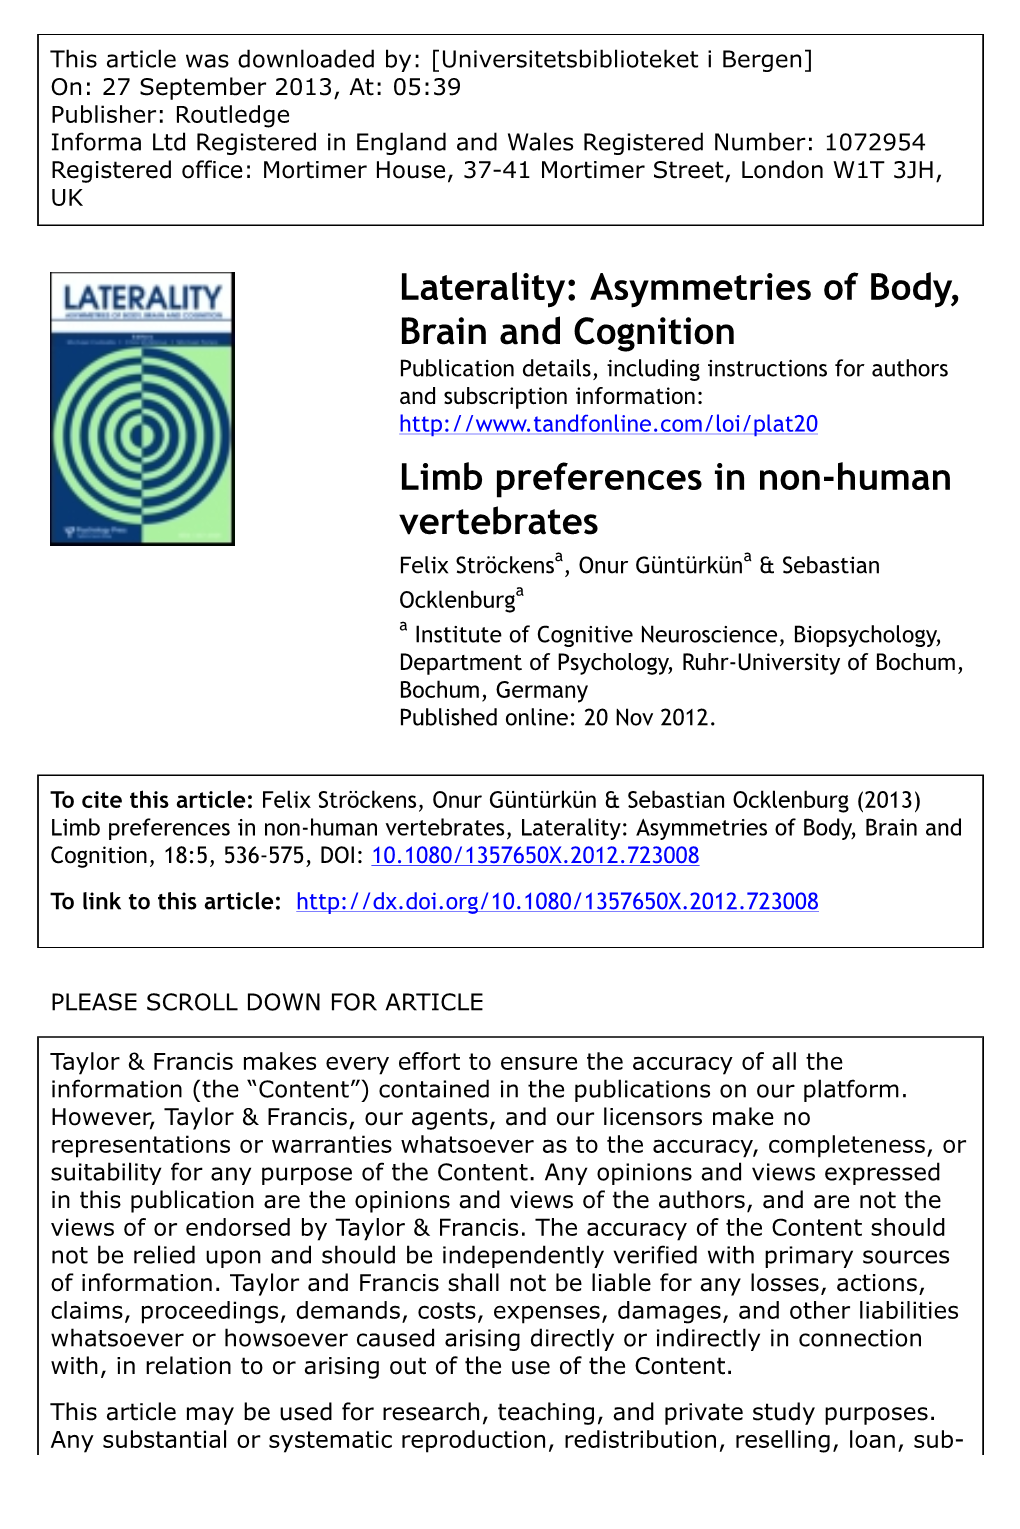 (2013) Limb Preferences in Non-Human Vertebrates, Laterality